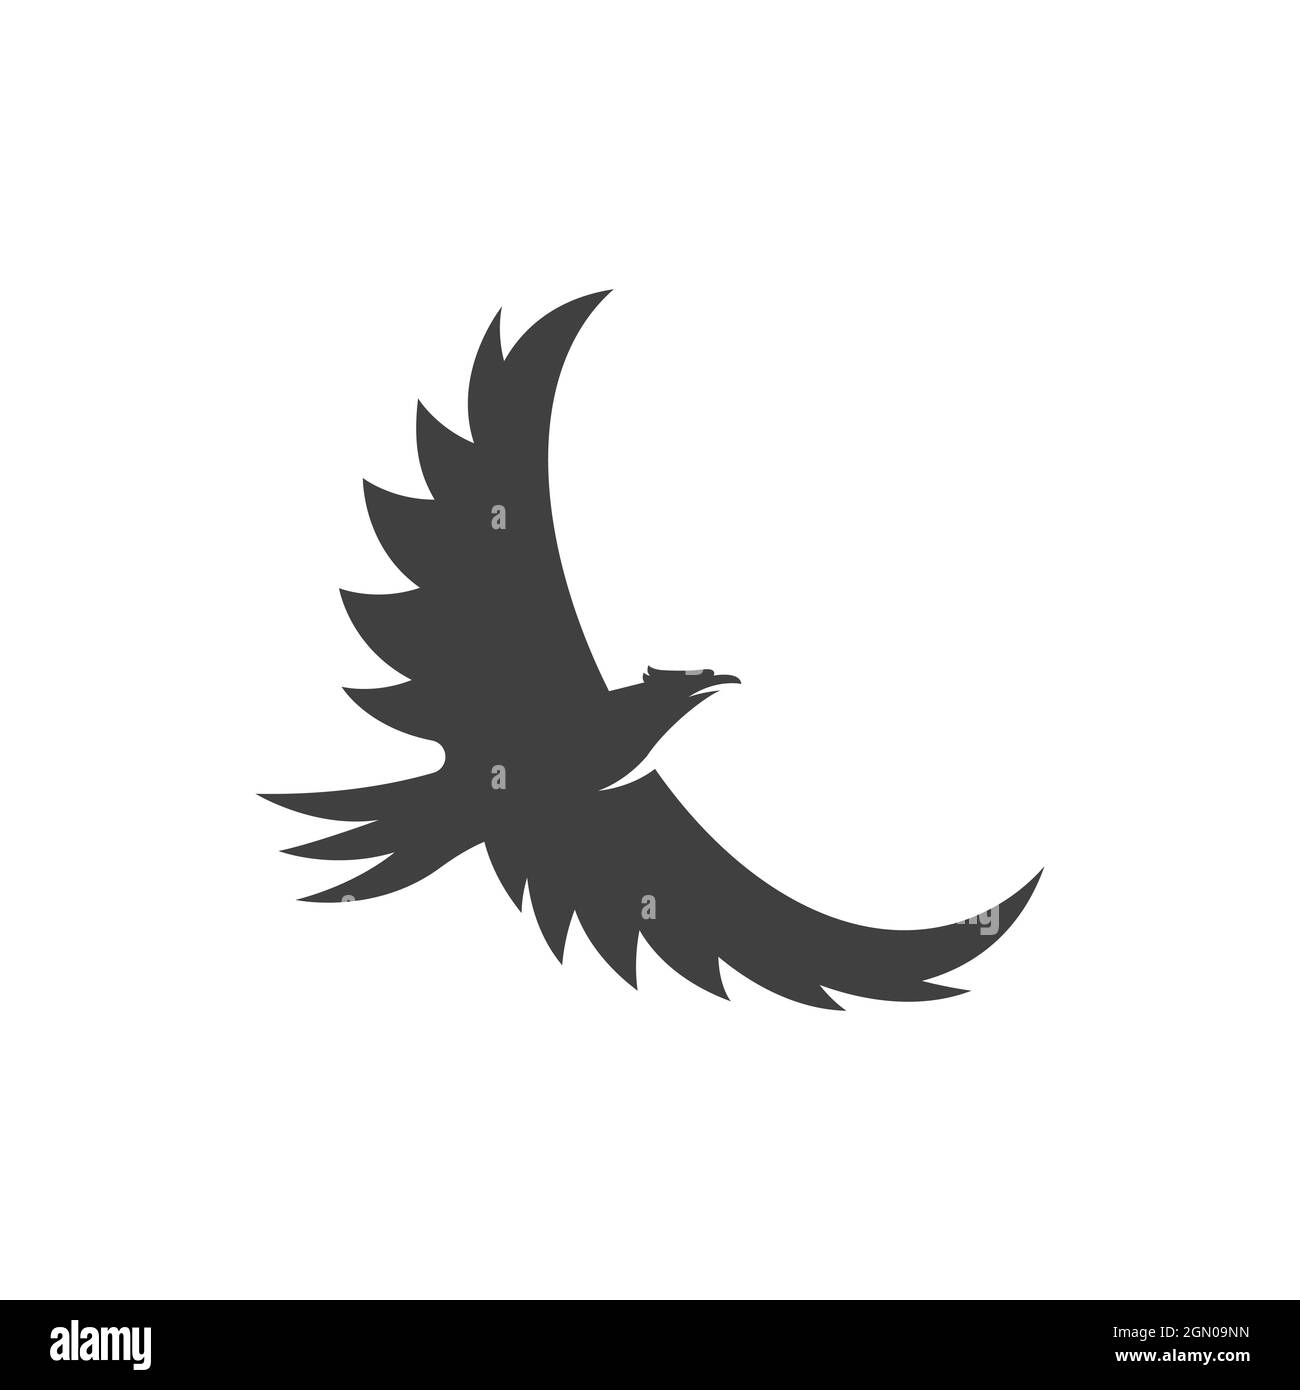 Falcon Flügel Symbol Vorlage Vektor Illustration Design Stockfoto